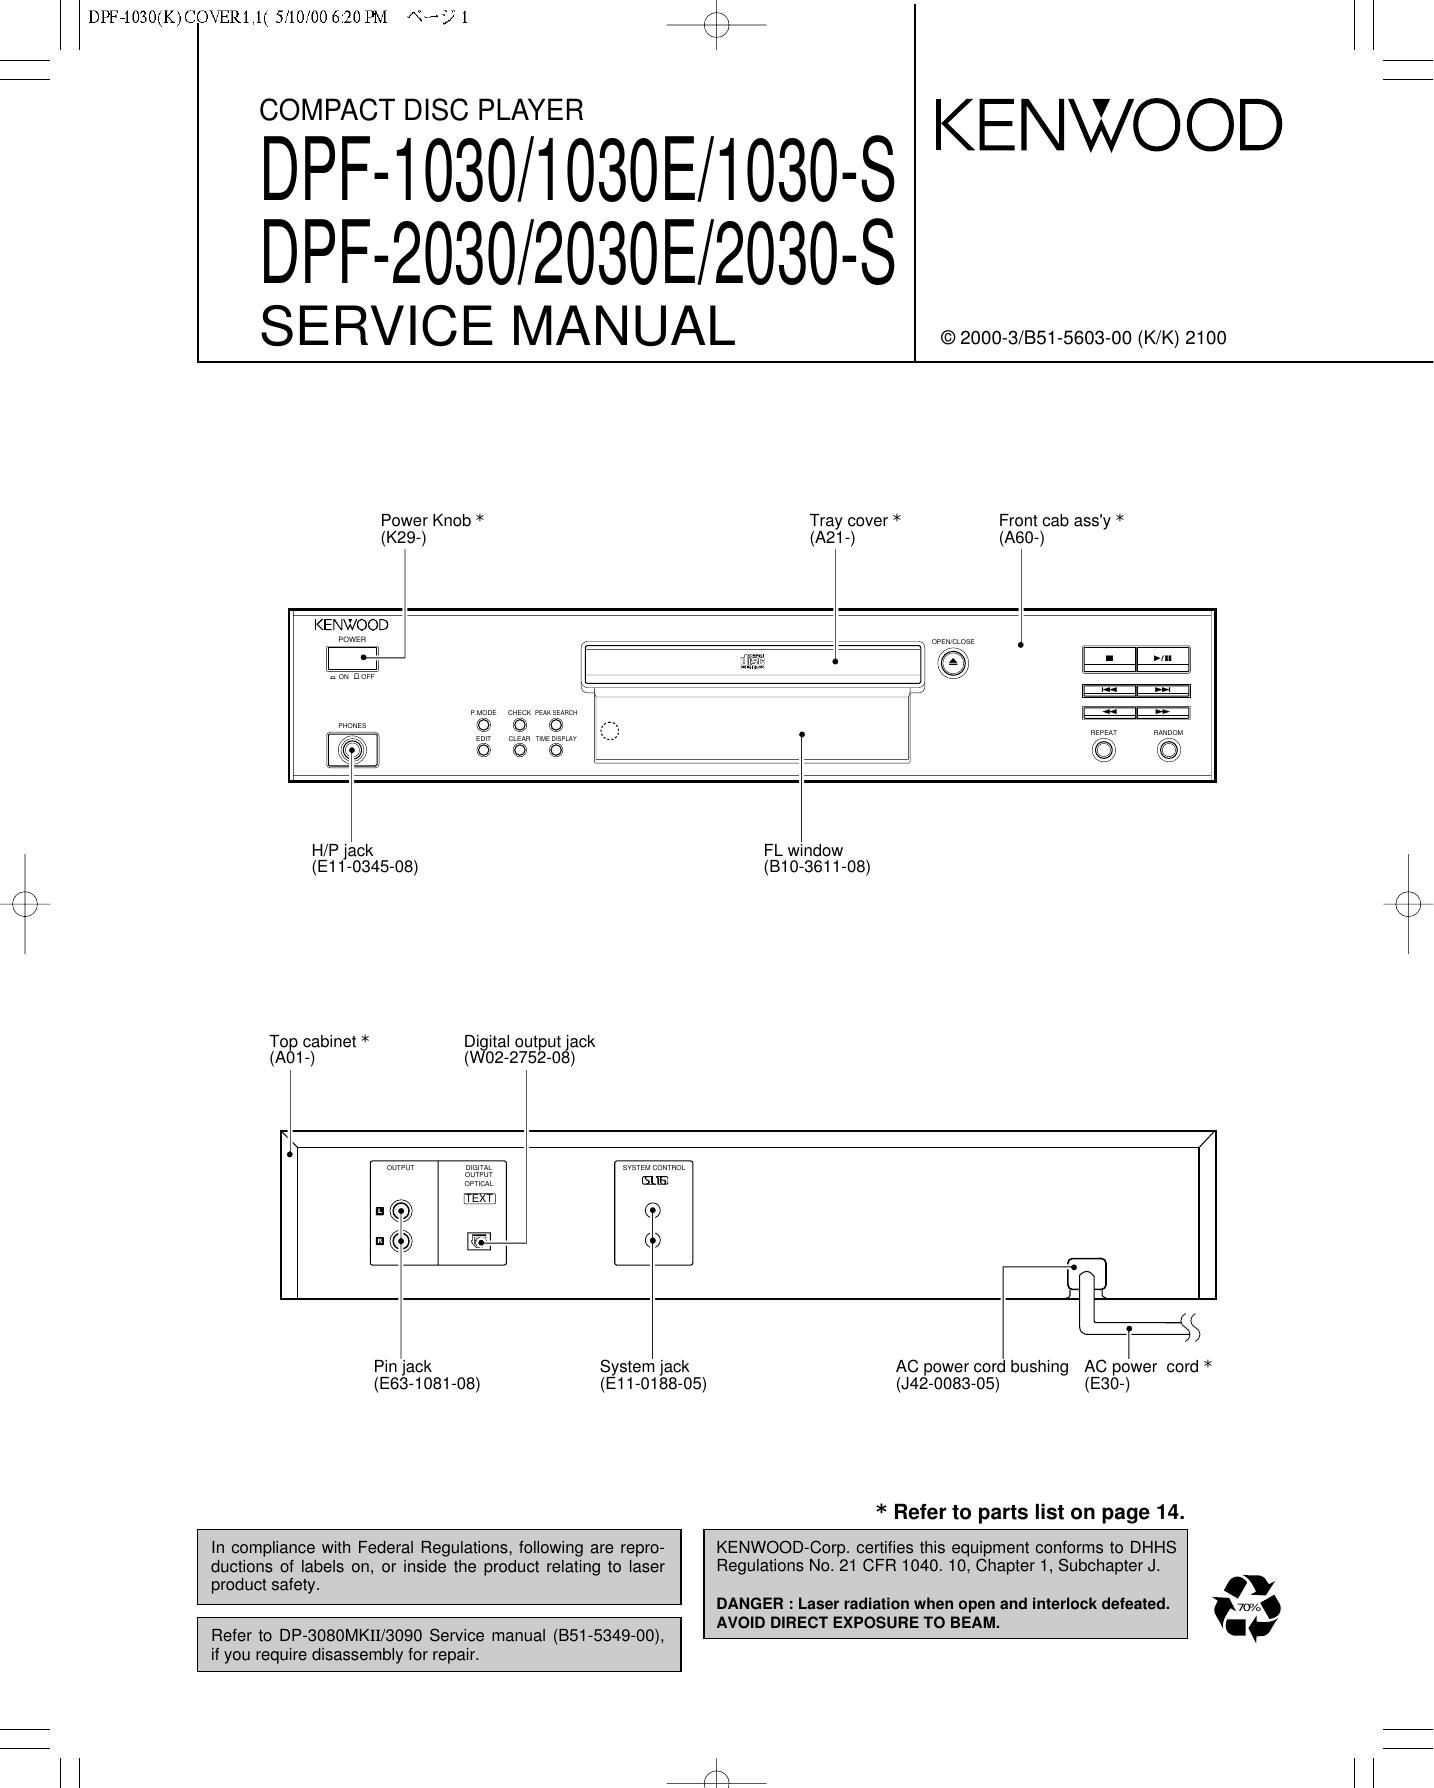 Kenwood DPF 1030 Service Manual